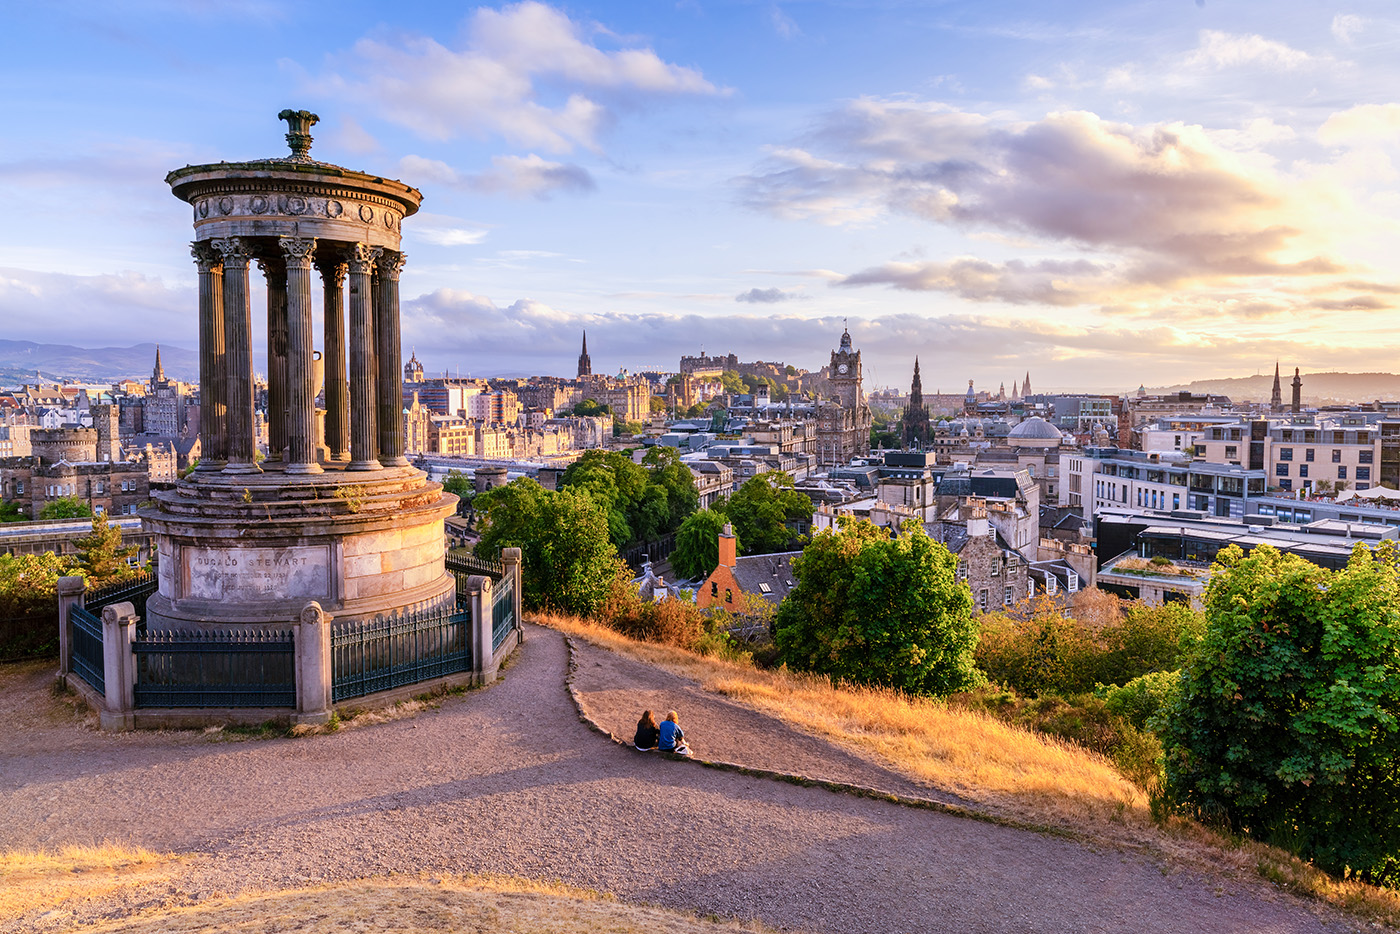 Enjoy a trip to Edinburgh: Arts, nightlife, shopping, and historic charm for a girls' getaway.